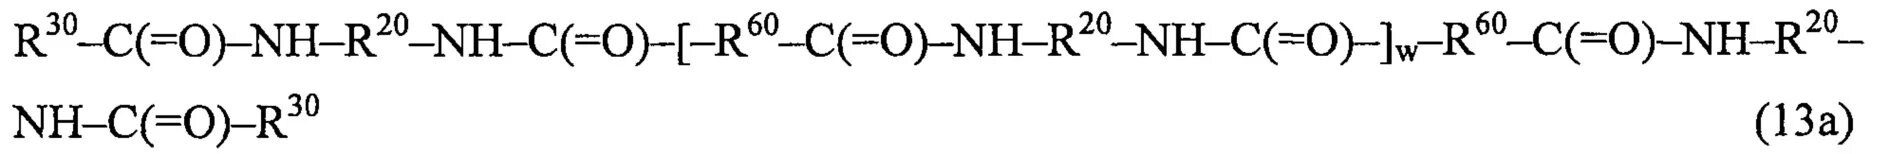 2 Хлорпропан и гидроксид натрия Водный. 1 4 Дихлорбутан. 1,4-Дихлорбутан + ZN. 2-Гептадиен2,4 + h2. Реакция спирта с бромоводородом